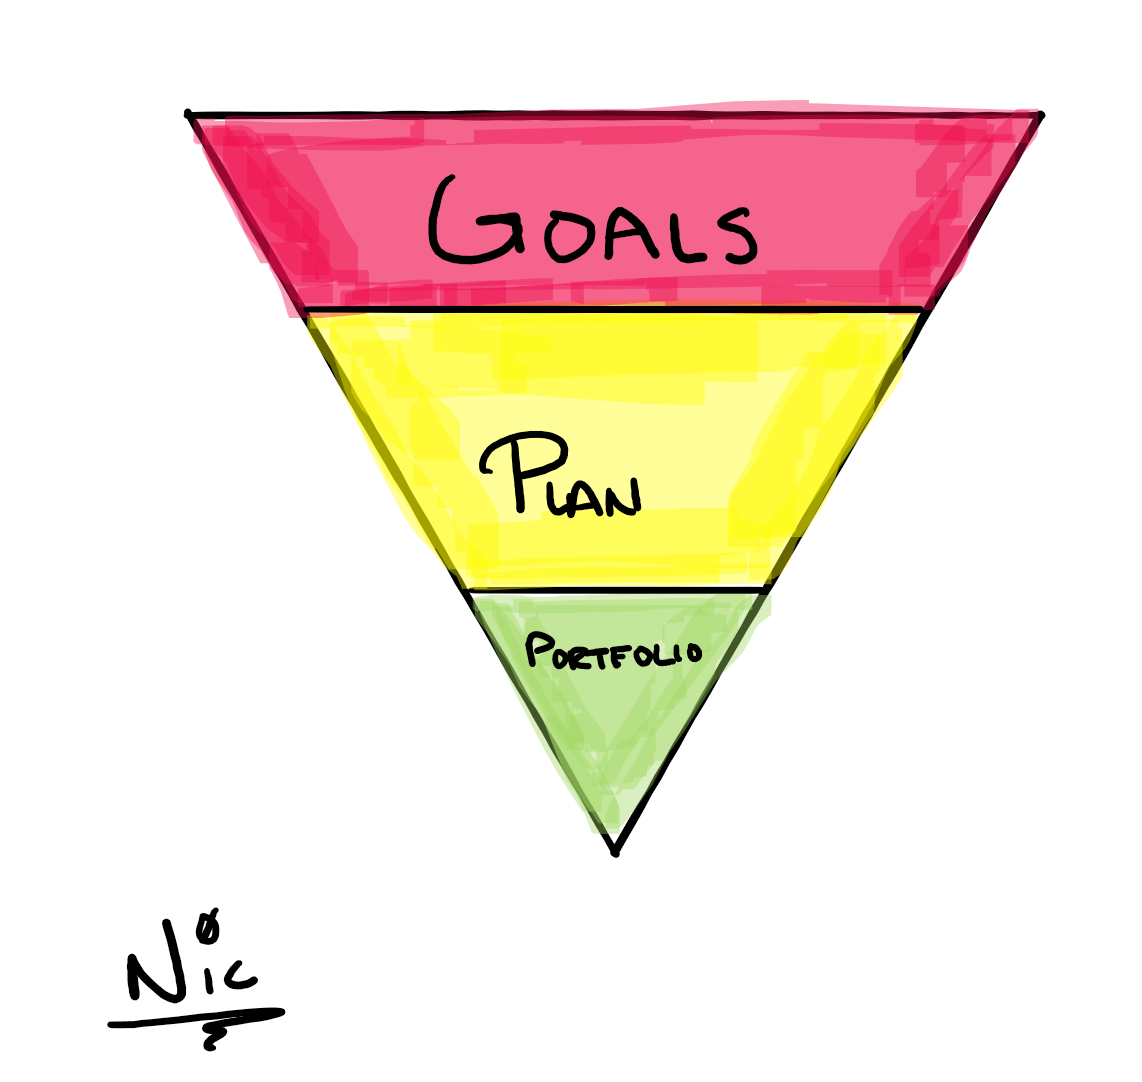 goals plan portfolio